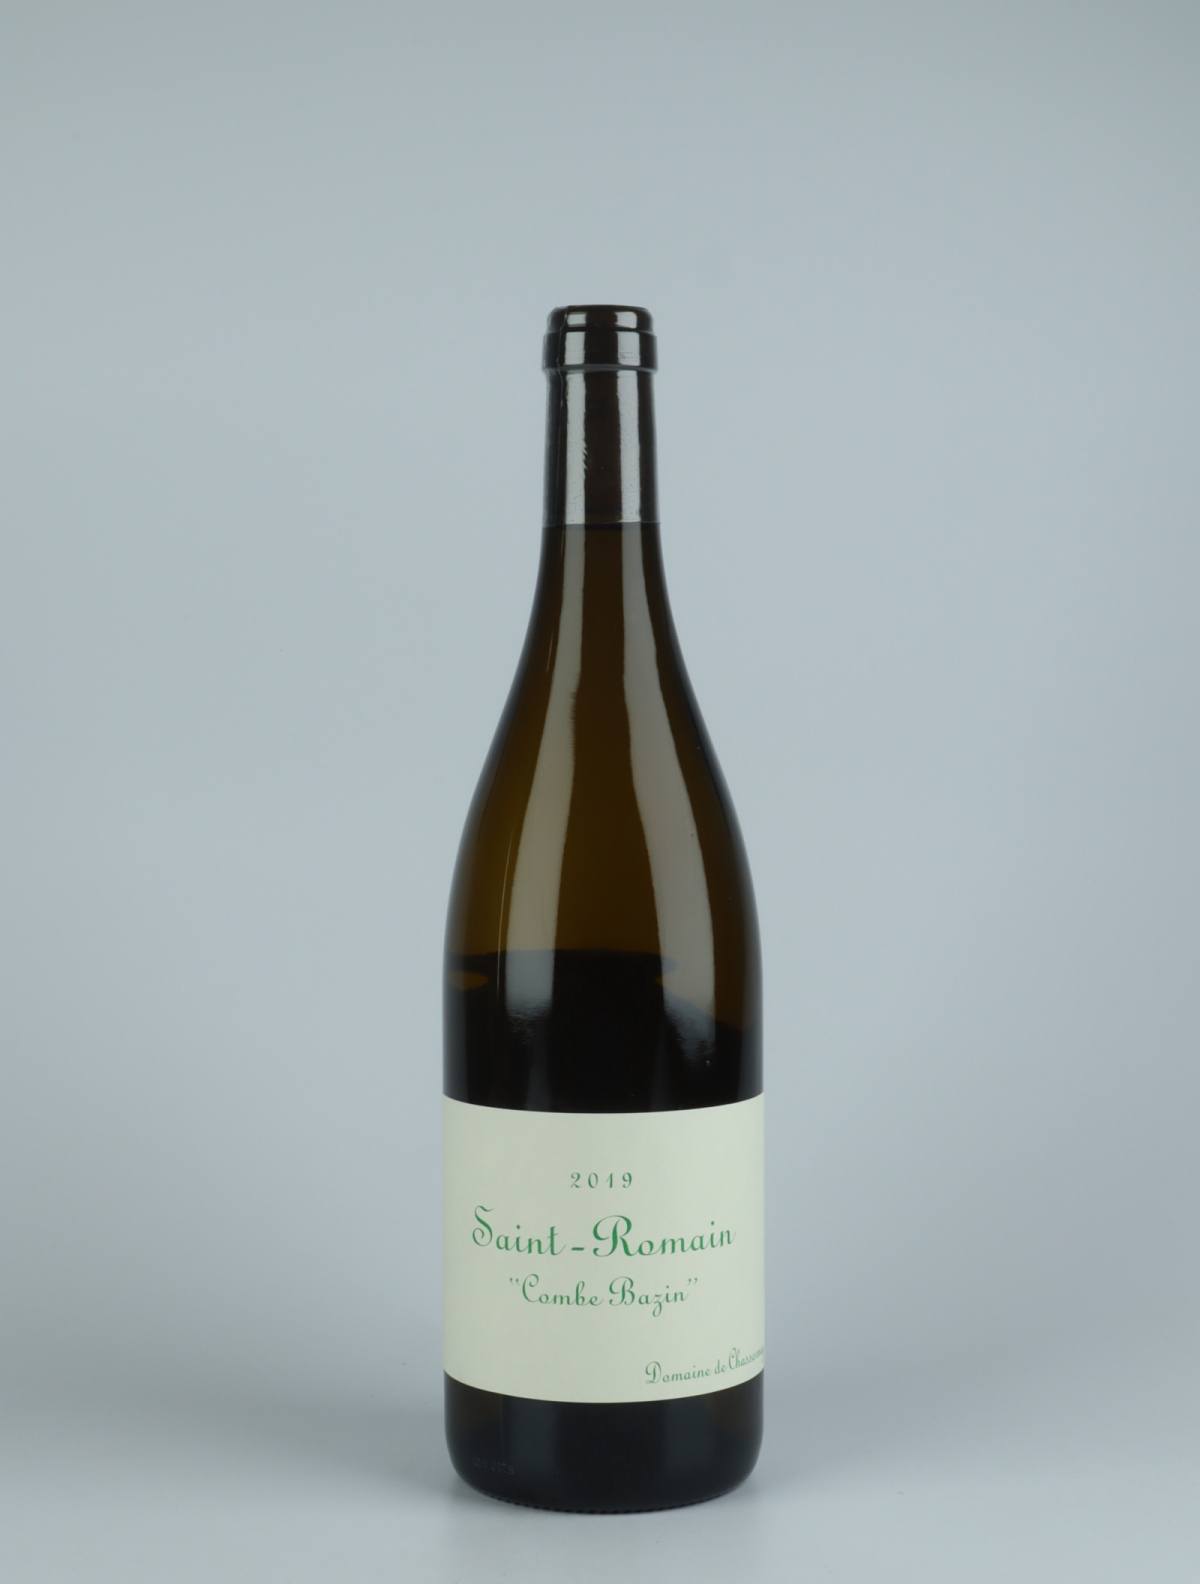 En flaske 2019 Saint Romain Blanc - Combe Bazin - Qvevris Hvidvin fra Domaine de Chassorney, Bourgogne i Frankrig